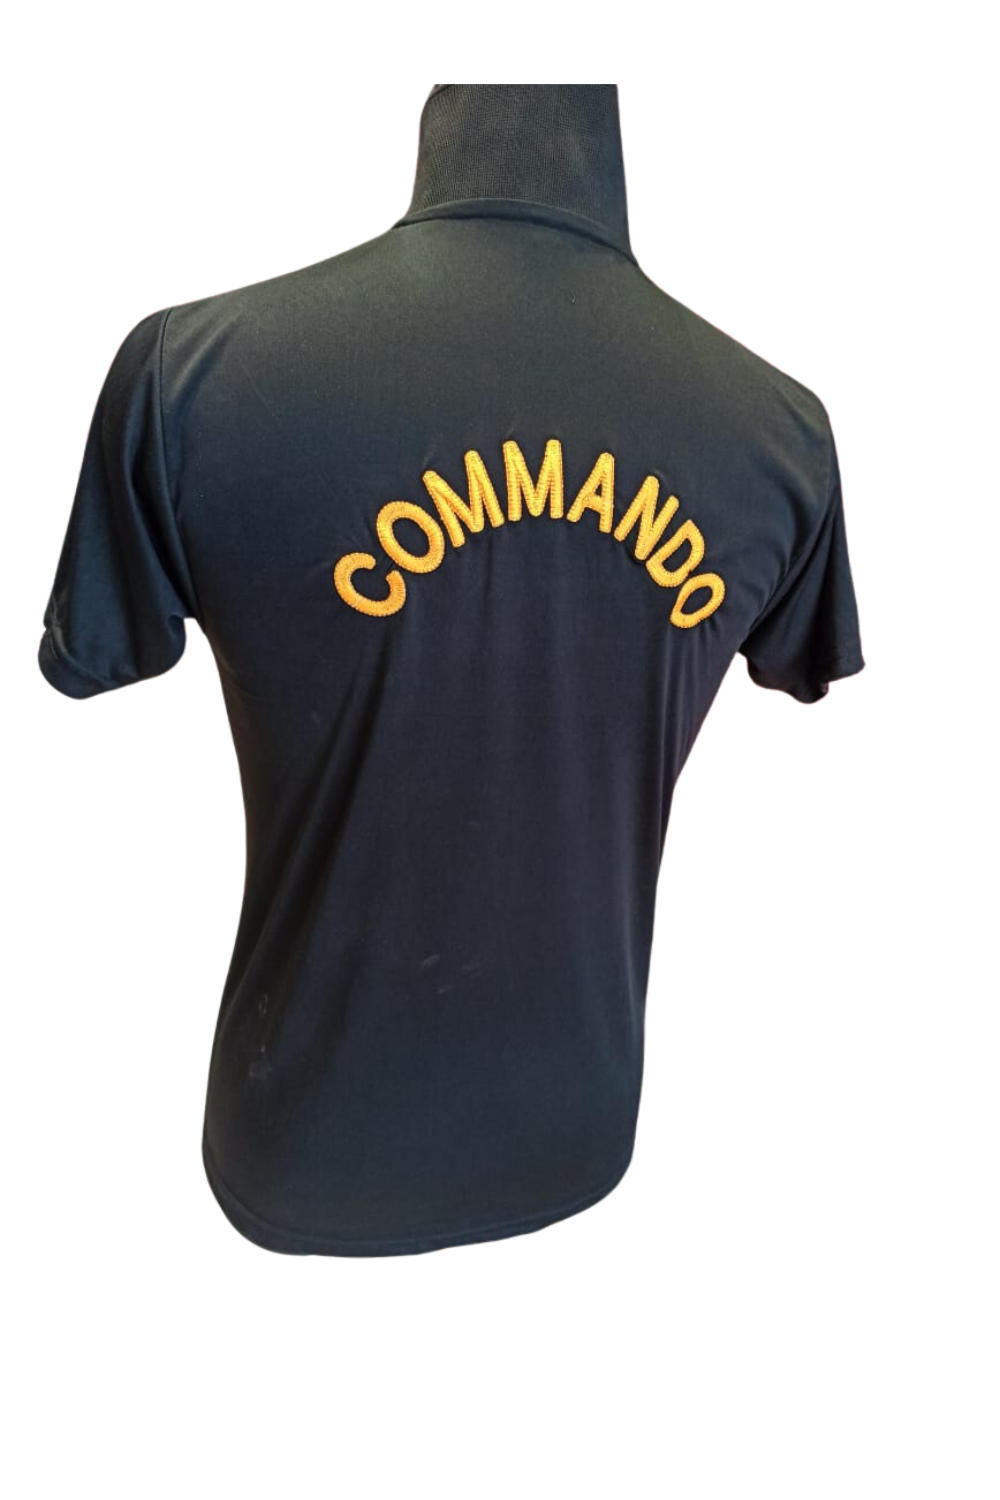 Commando T Shirt - SSB